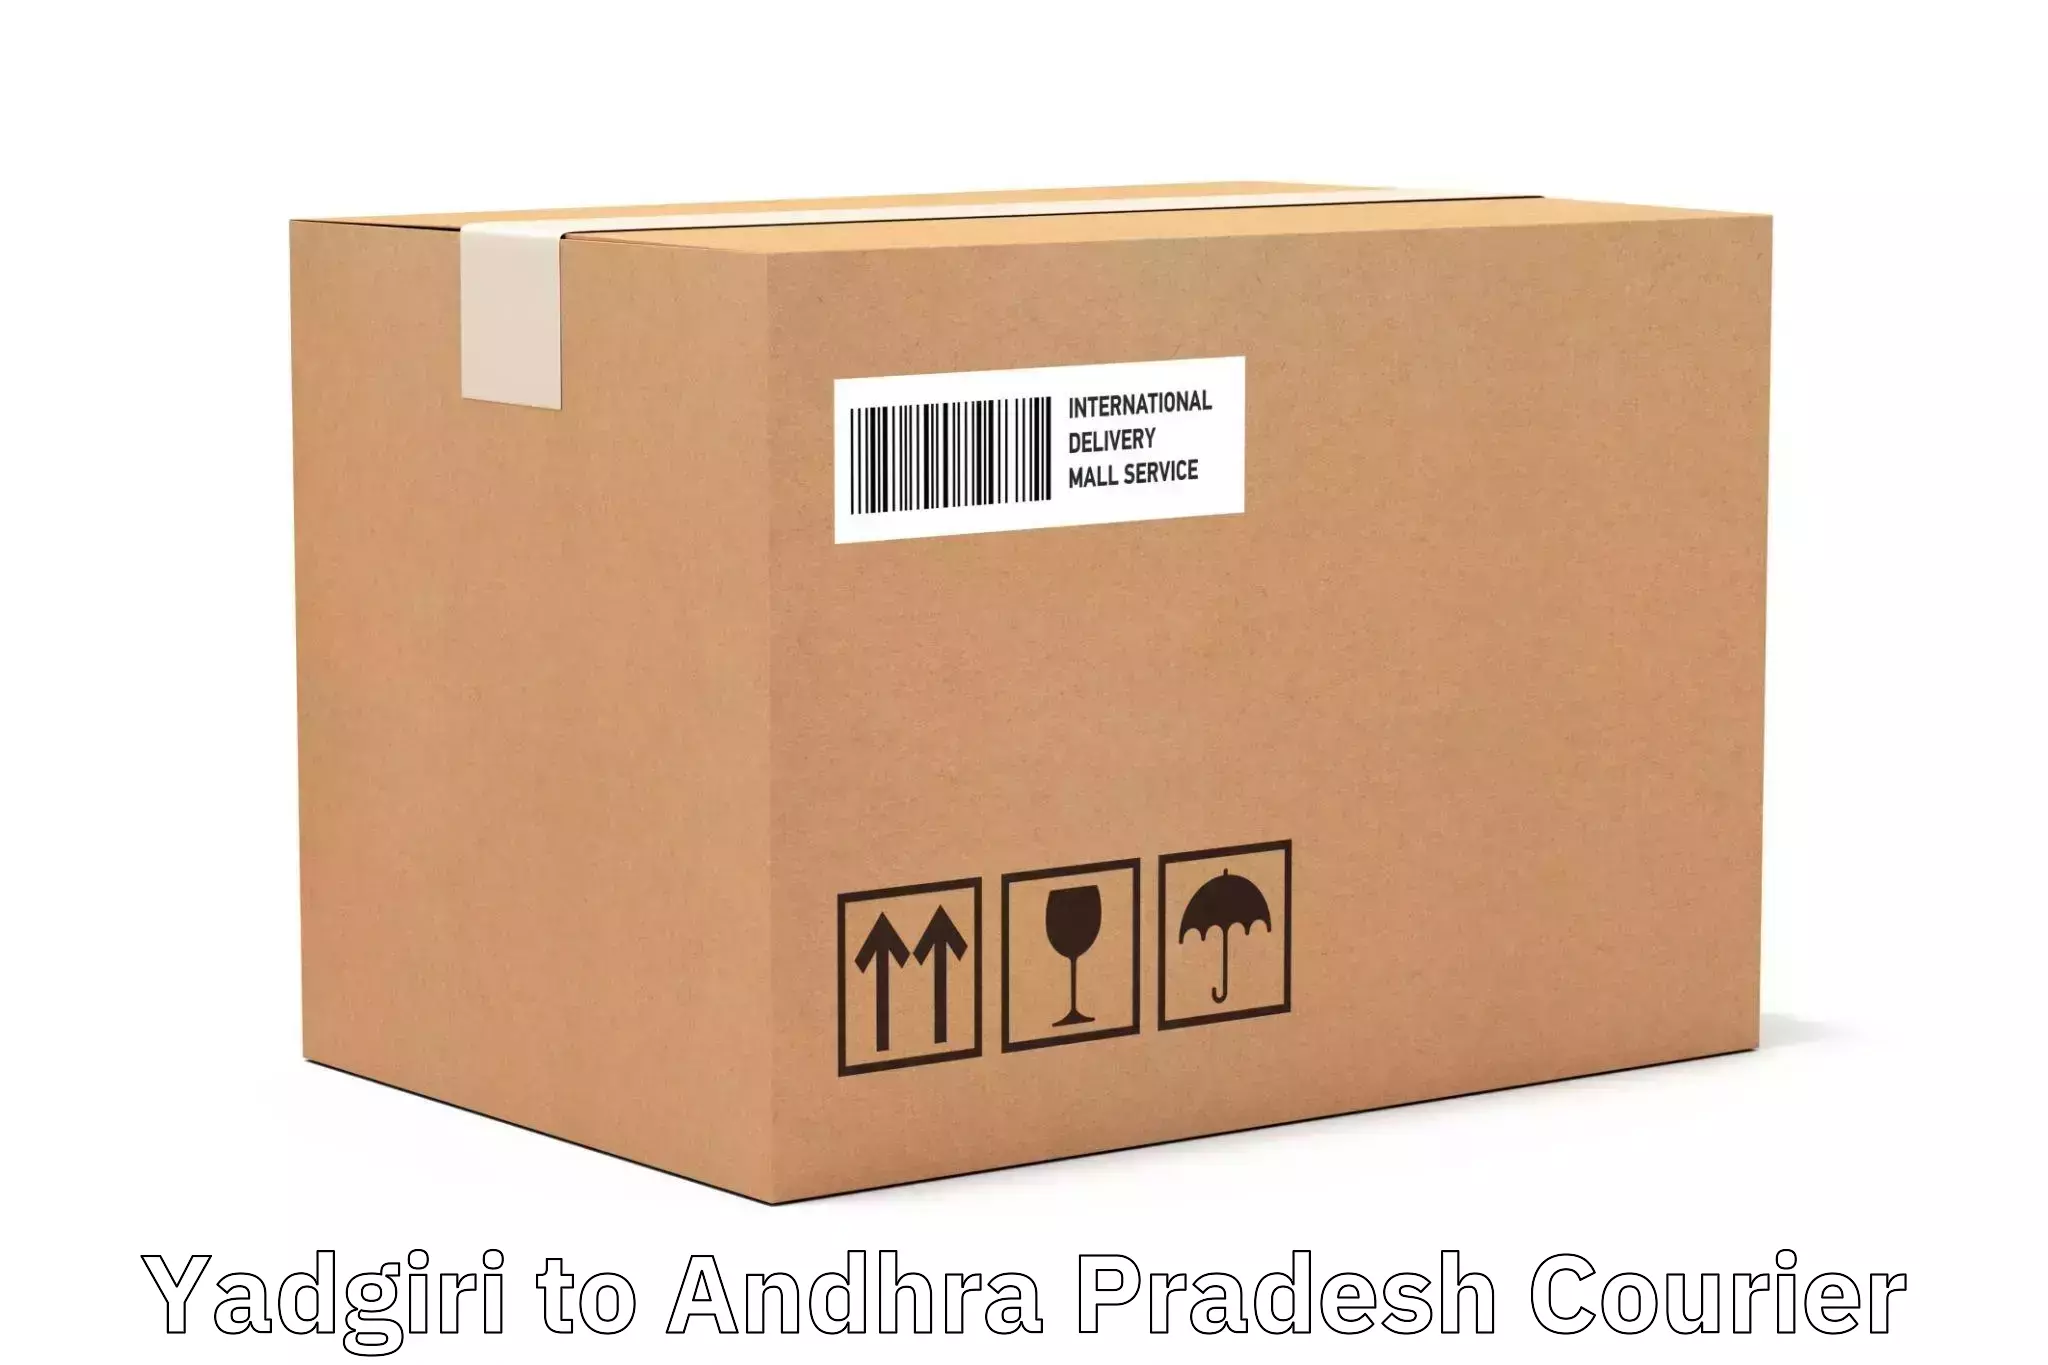 Enhanced tracking features Yadgiri to Andhra Pradesh